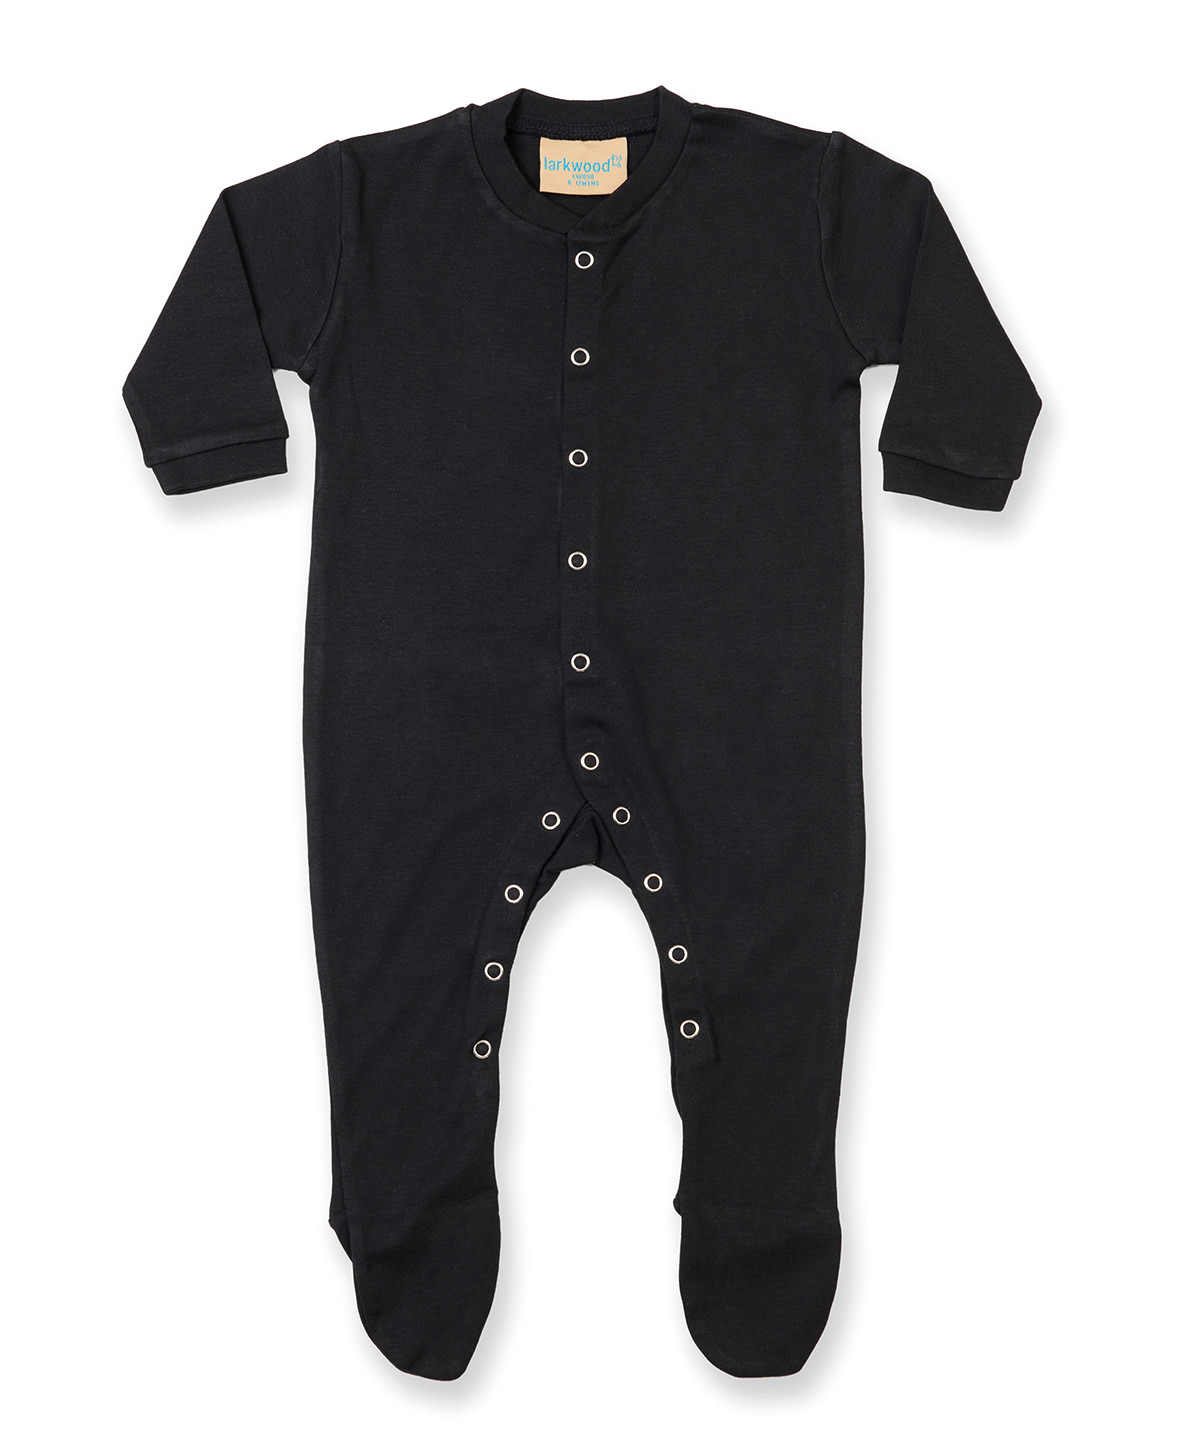 Sleepsuit Black Size 6